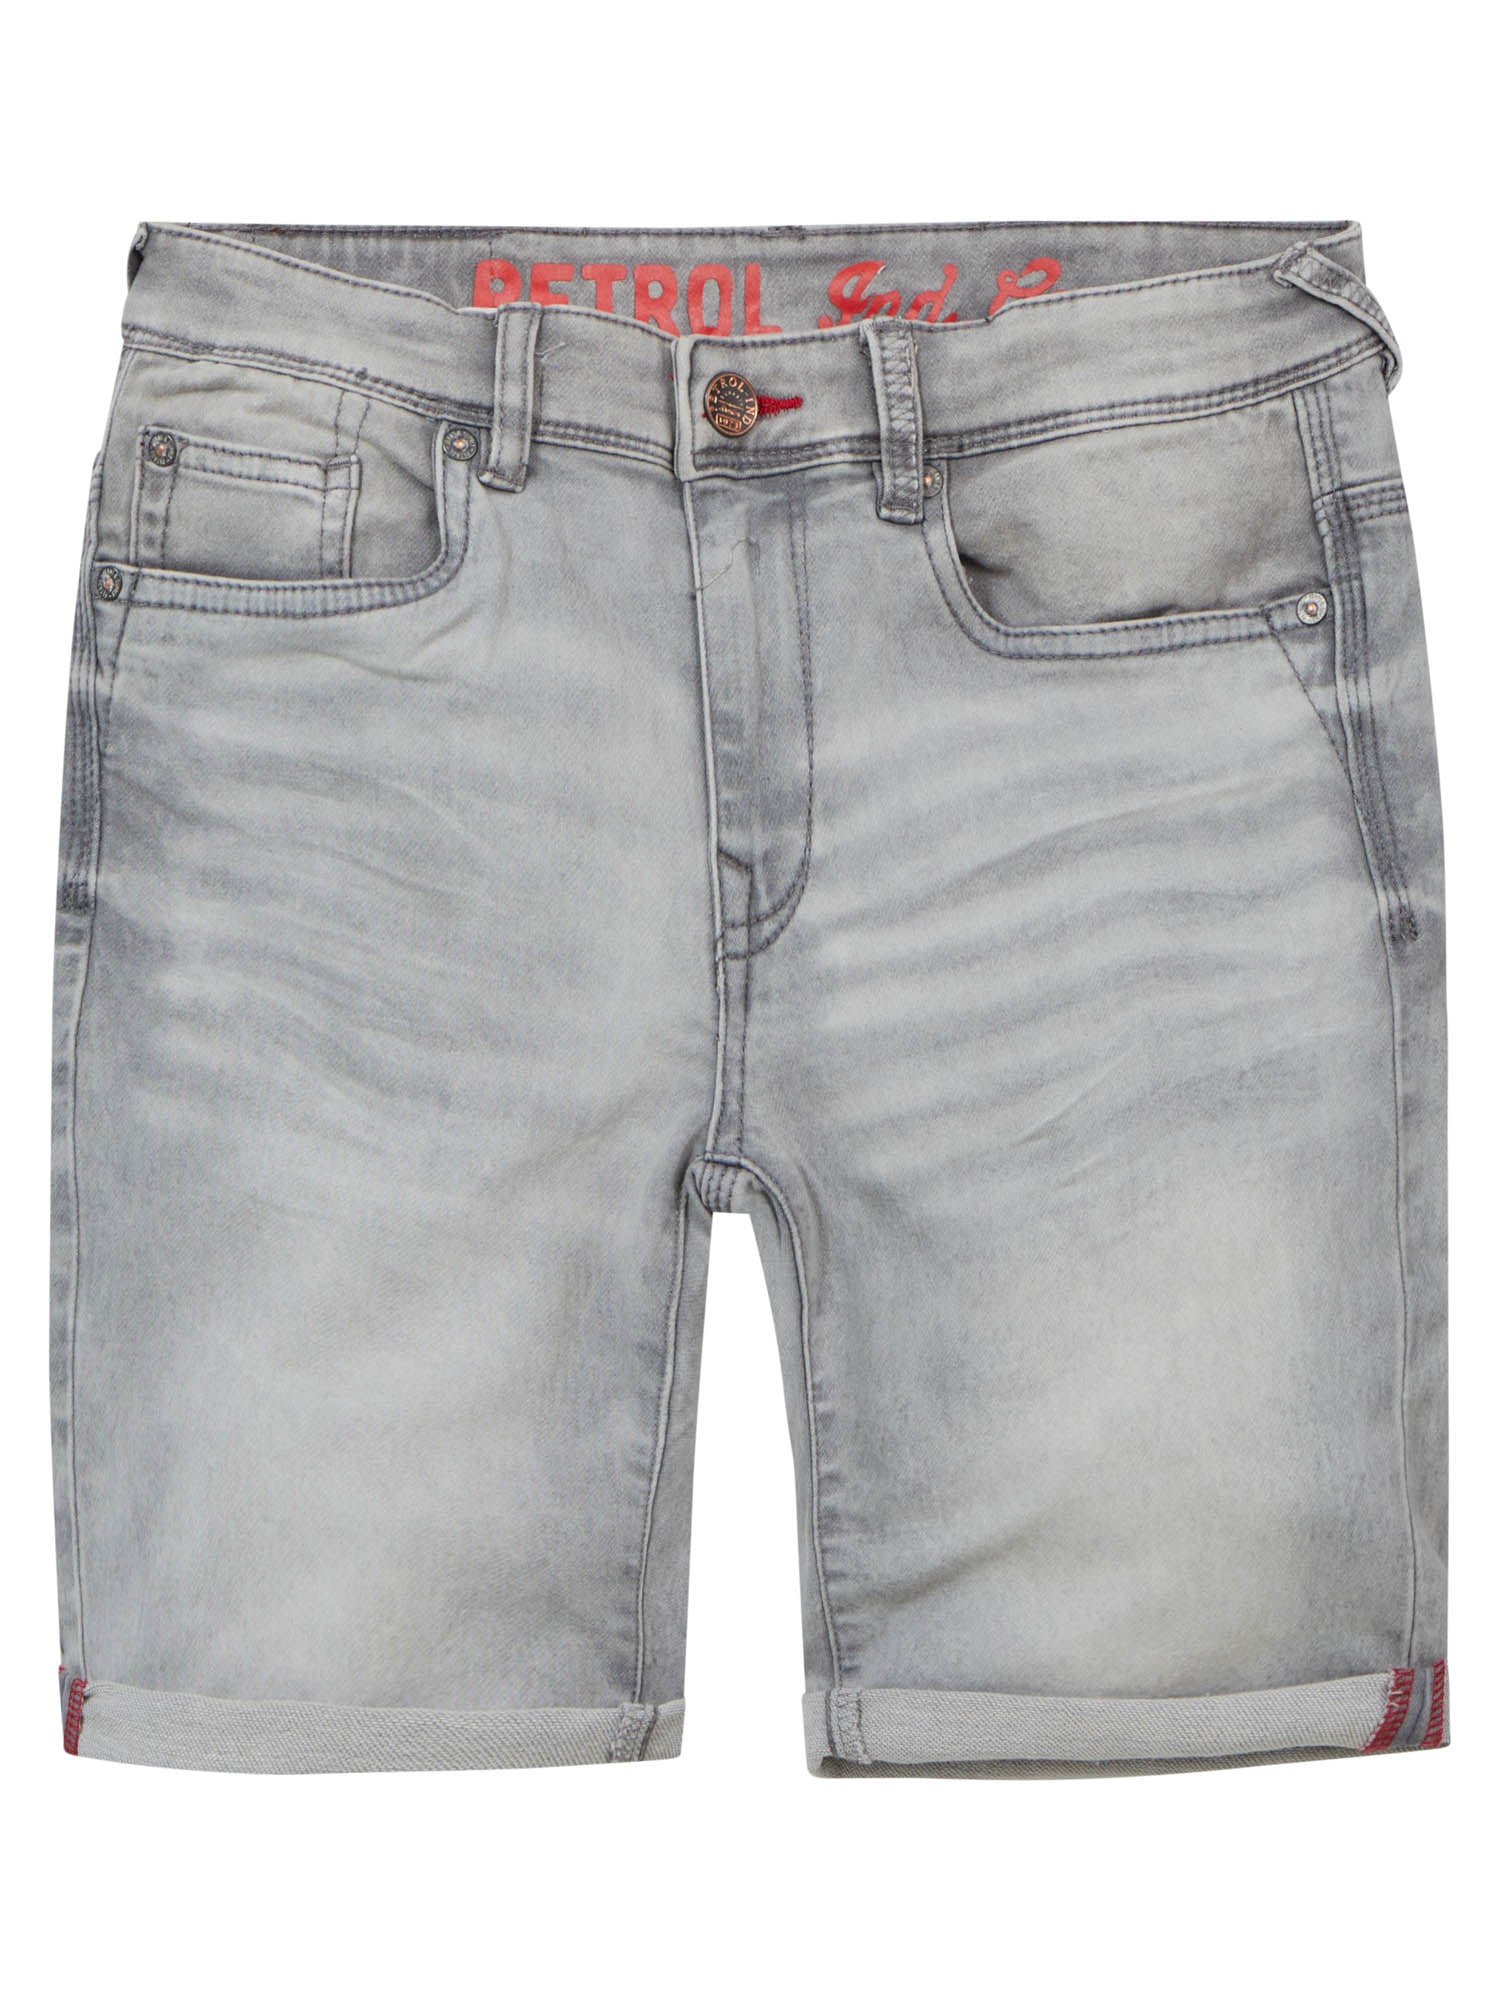 Jongens Jeans short five-pocket van Petrol in de kleur Dusty Silver in maat 176.